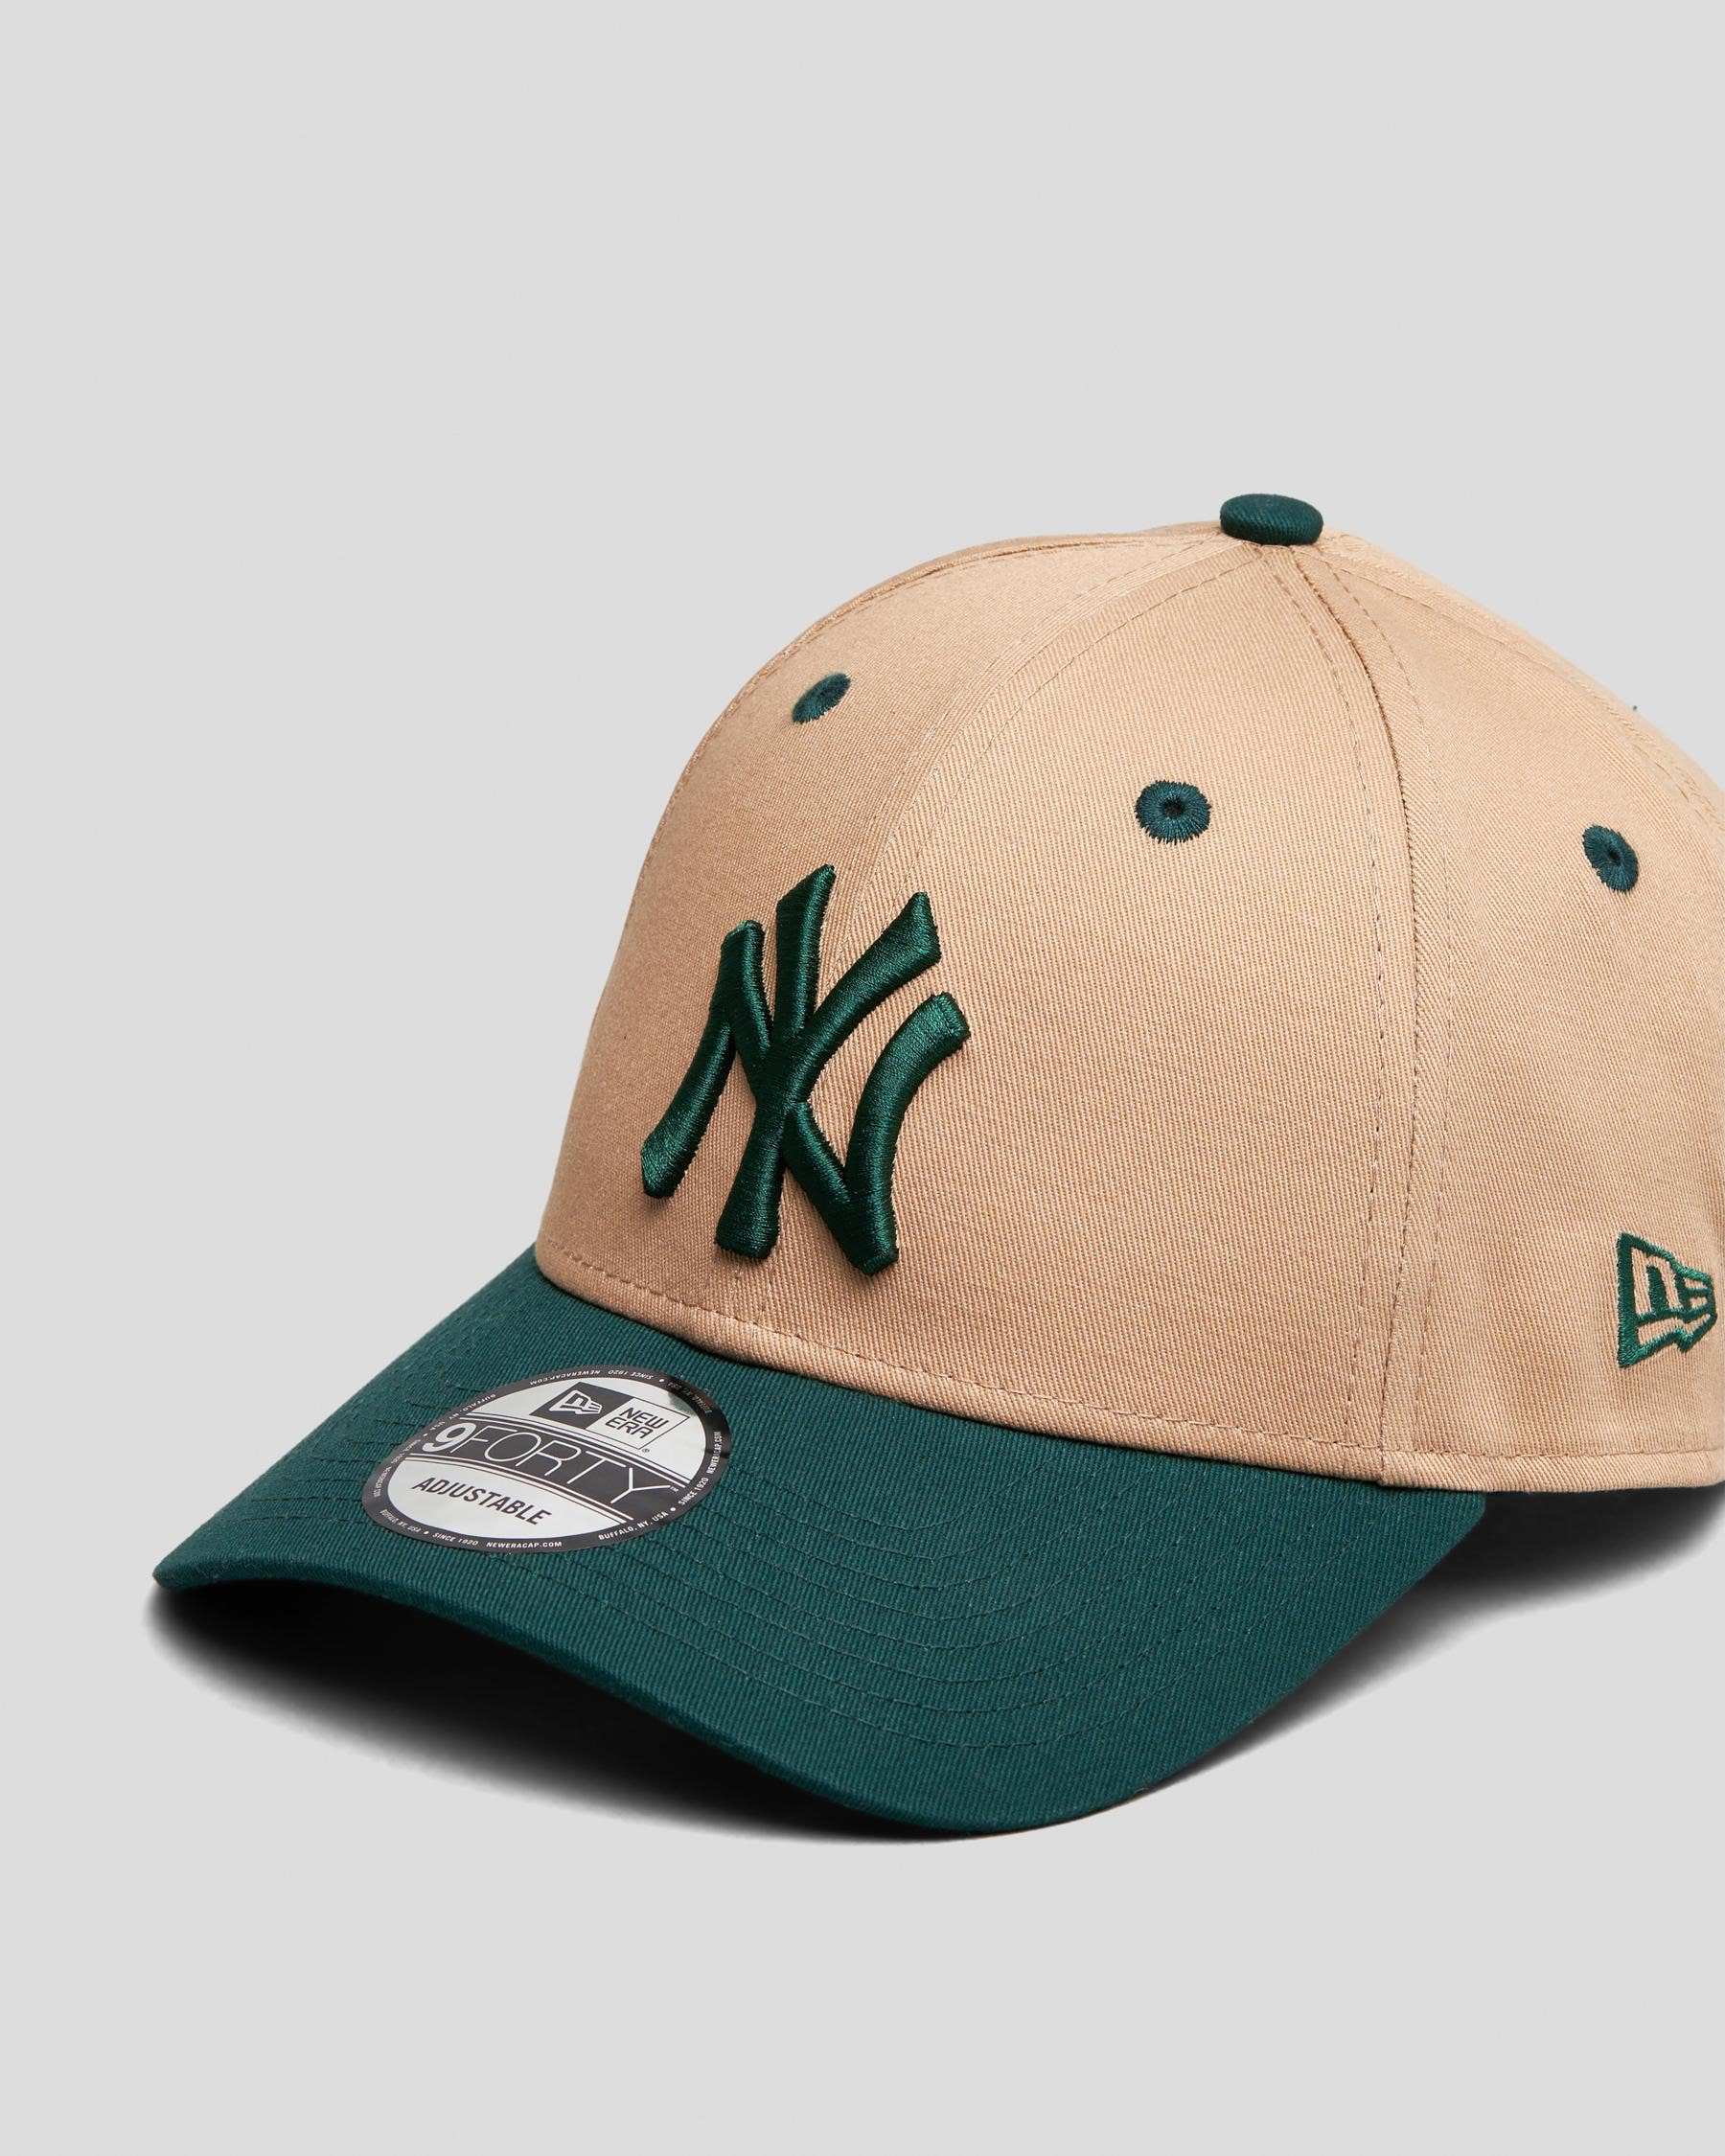 New Era - New York Yankees - 9FORTY Cap - Camel/White